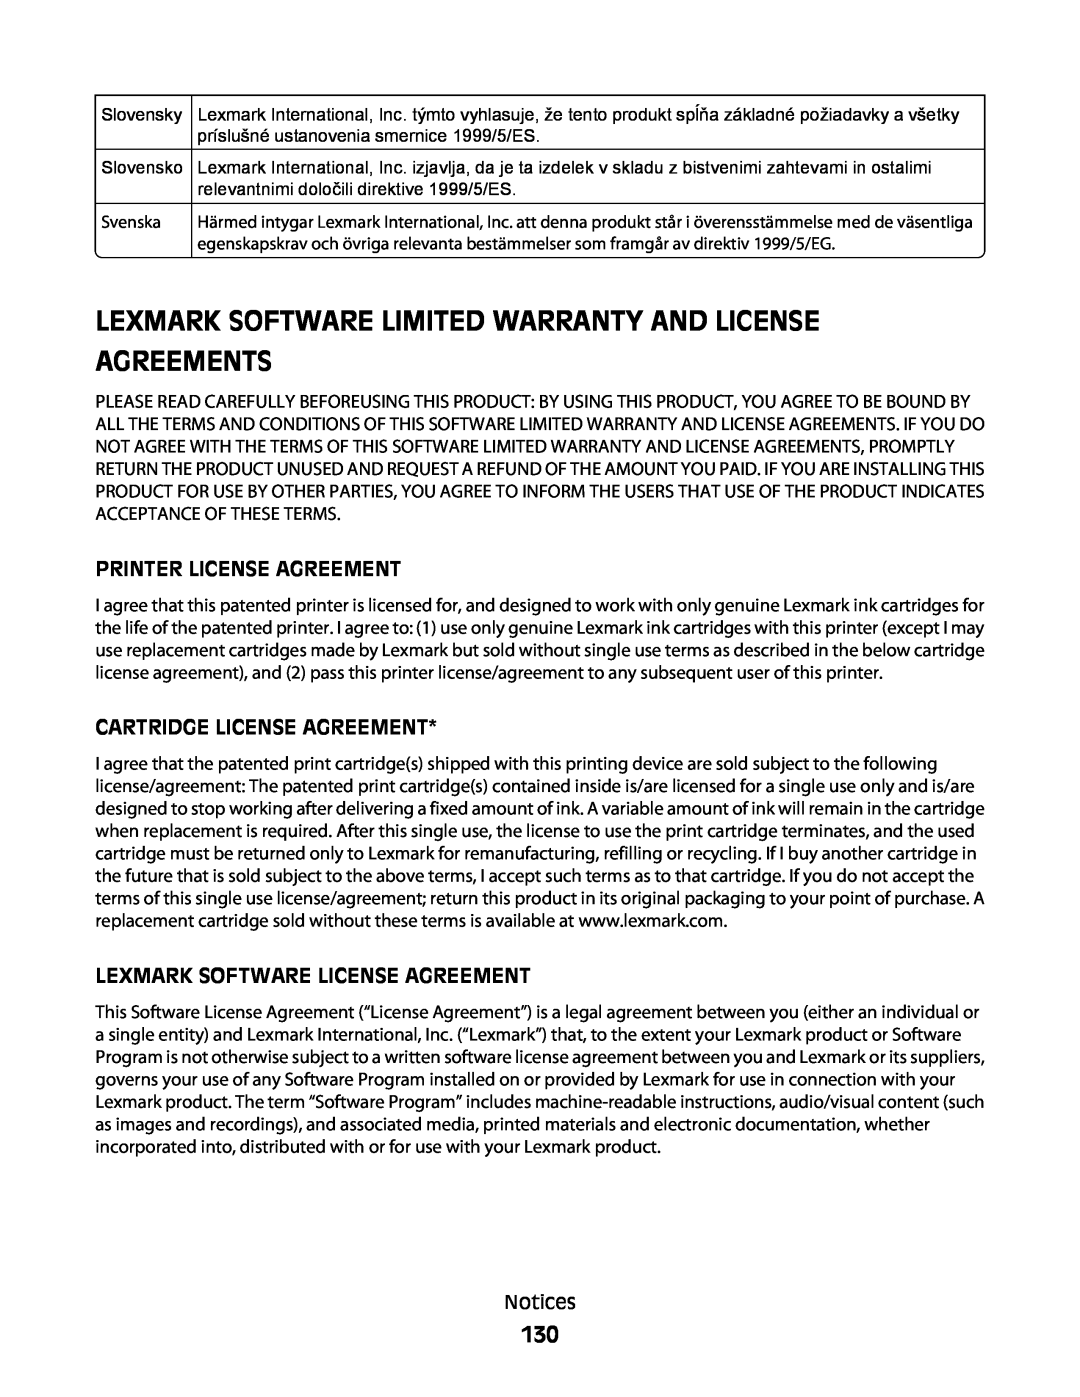 Lexmark 101, 10E manual Printer License Agreement, Cartridge License Agreement, Lexmark Software License Agreement 